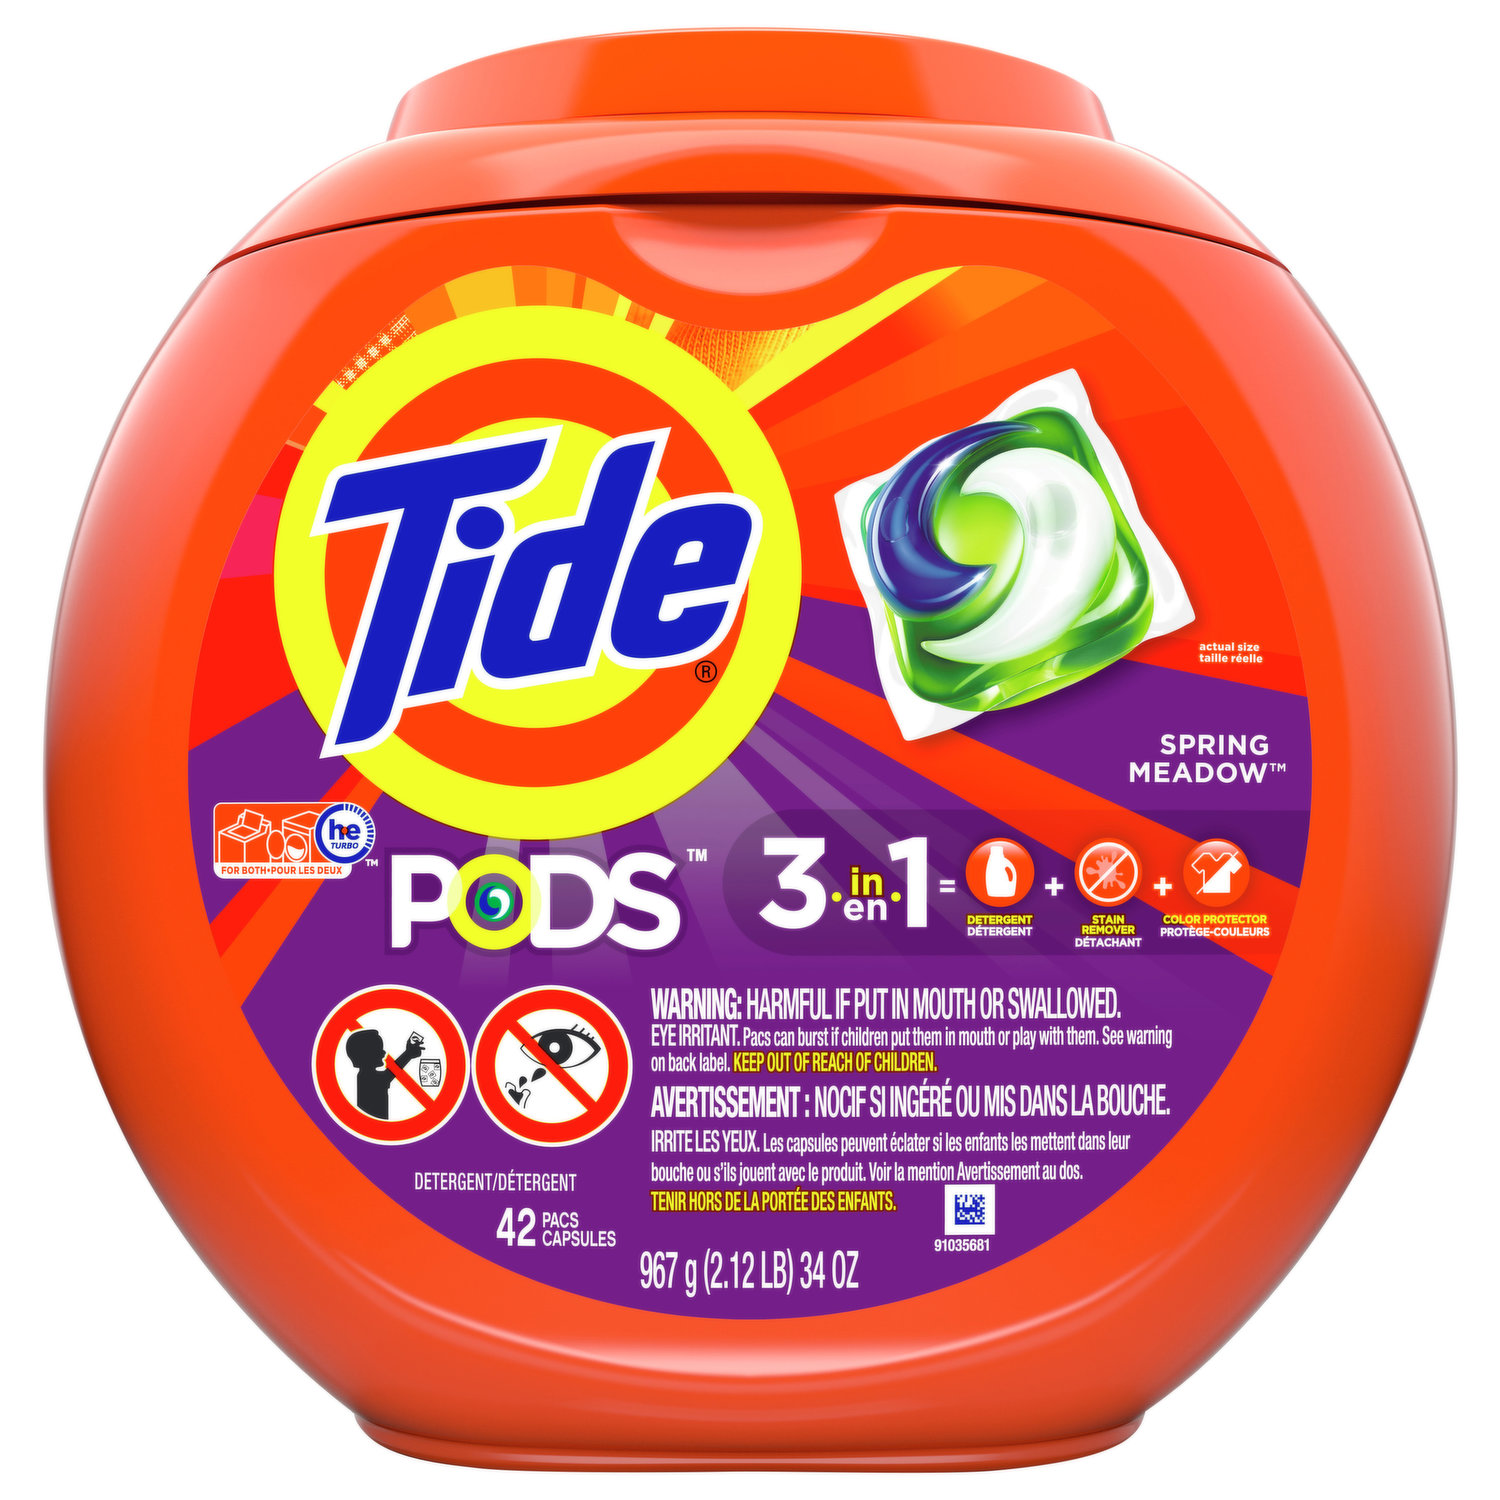 Tide PODS Laundry Detergent Fresh Coral Blast Scent